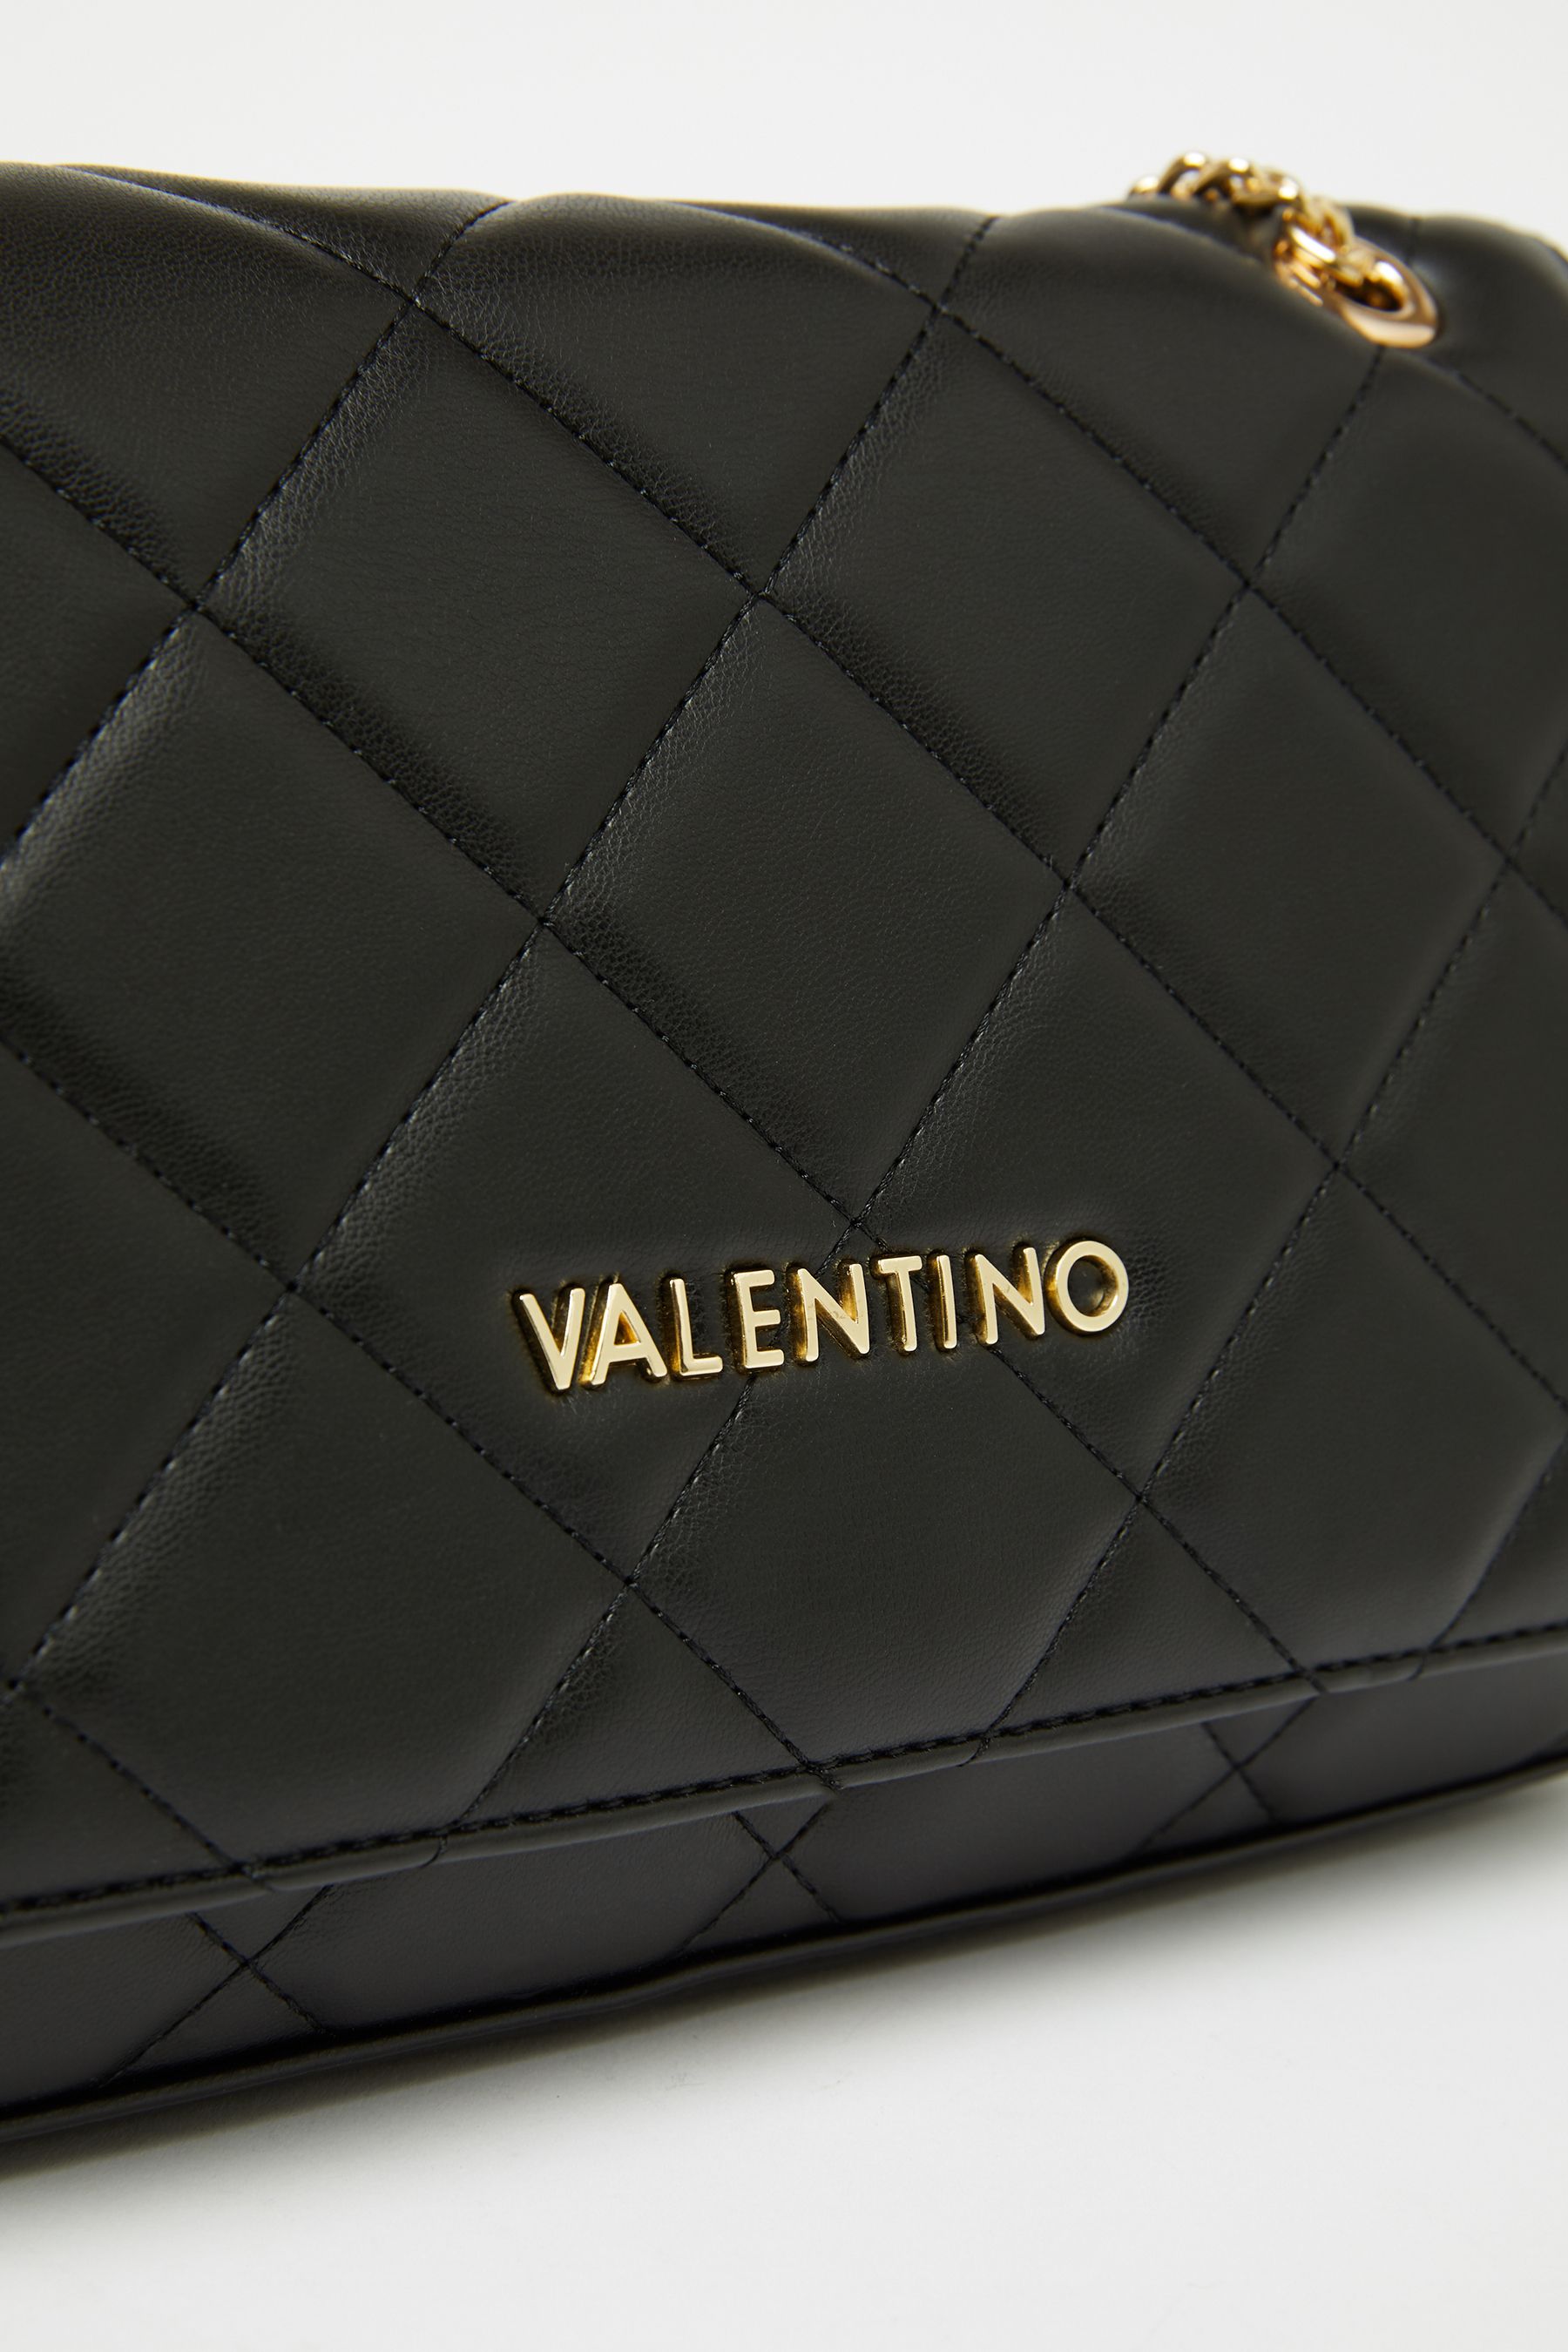 Valentino Bags】Ocarina スマホケース (Mario Valentino_Valentino